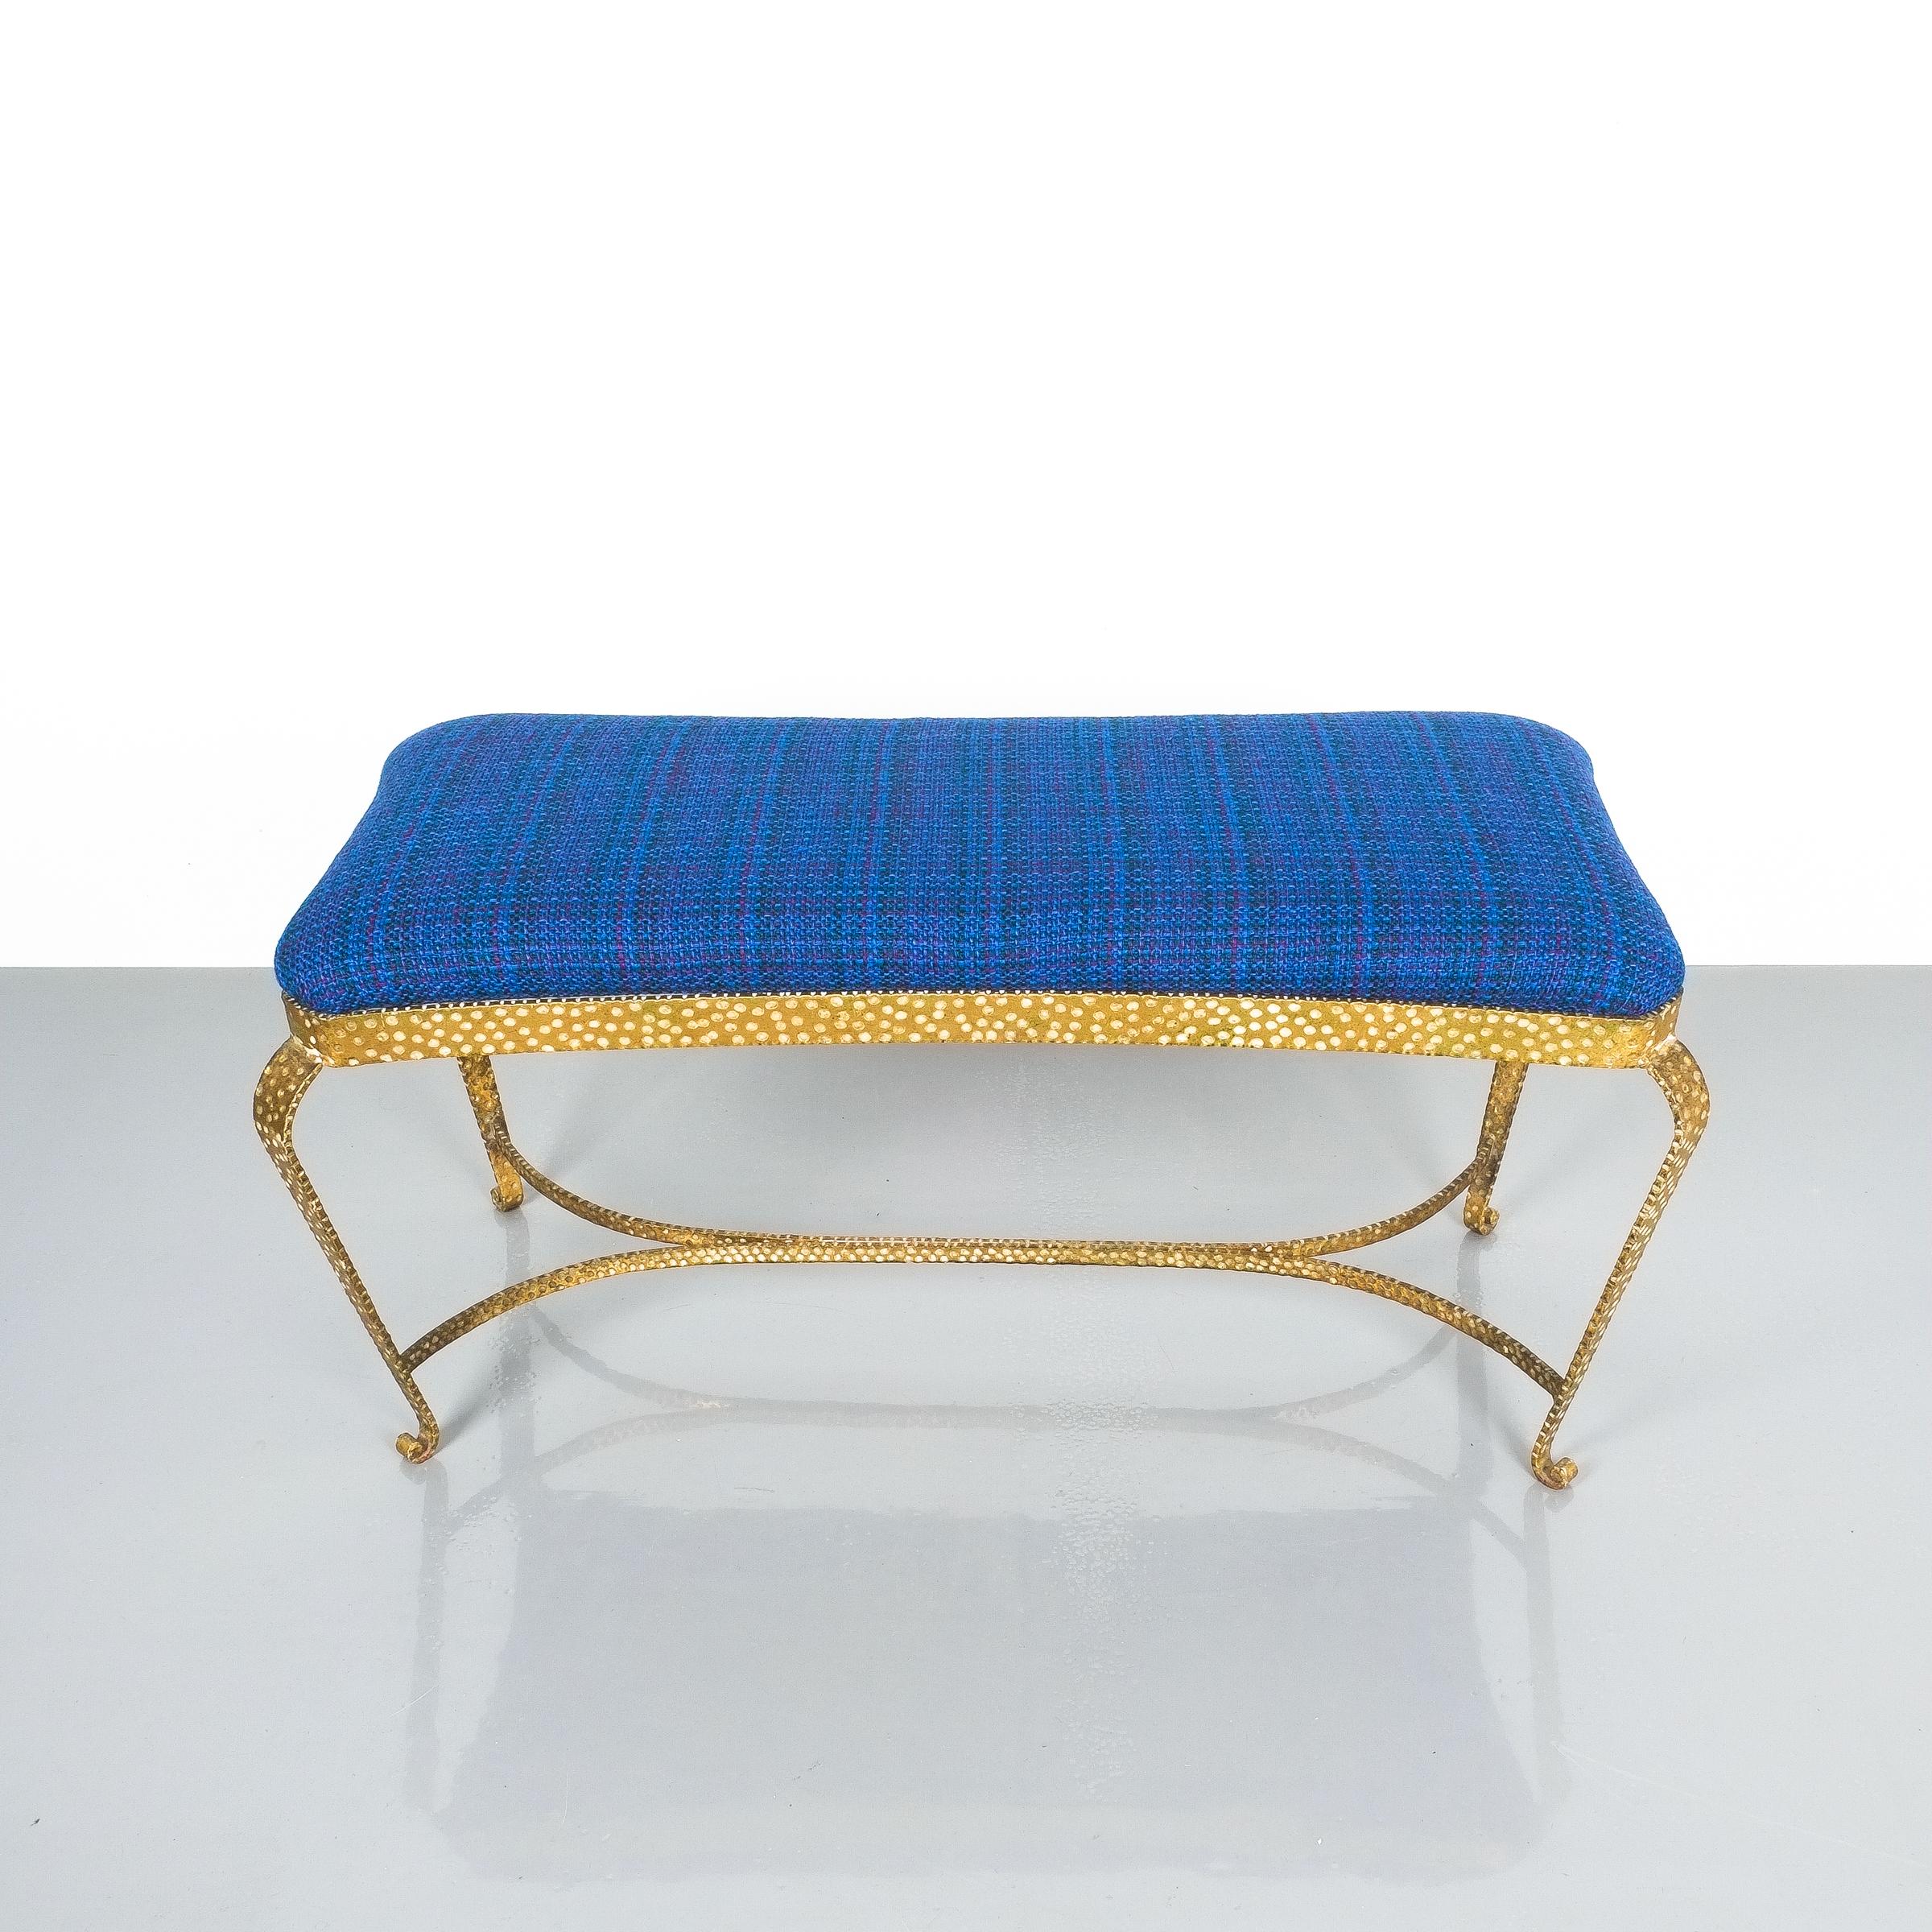 Italian Pair of Pier Luigi Colli Gold Iron Bedroom Benches Blue Fabric, Italy, 1950